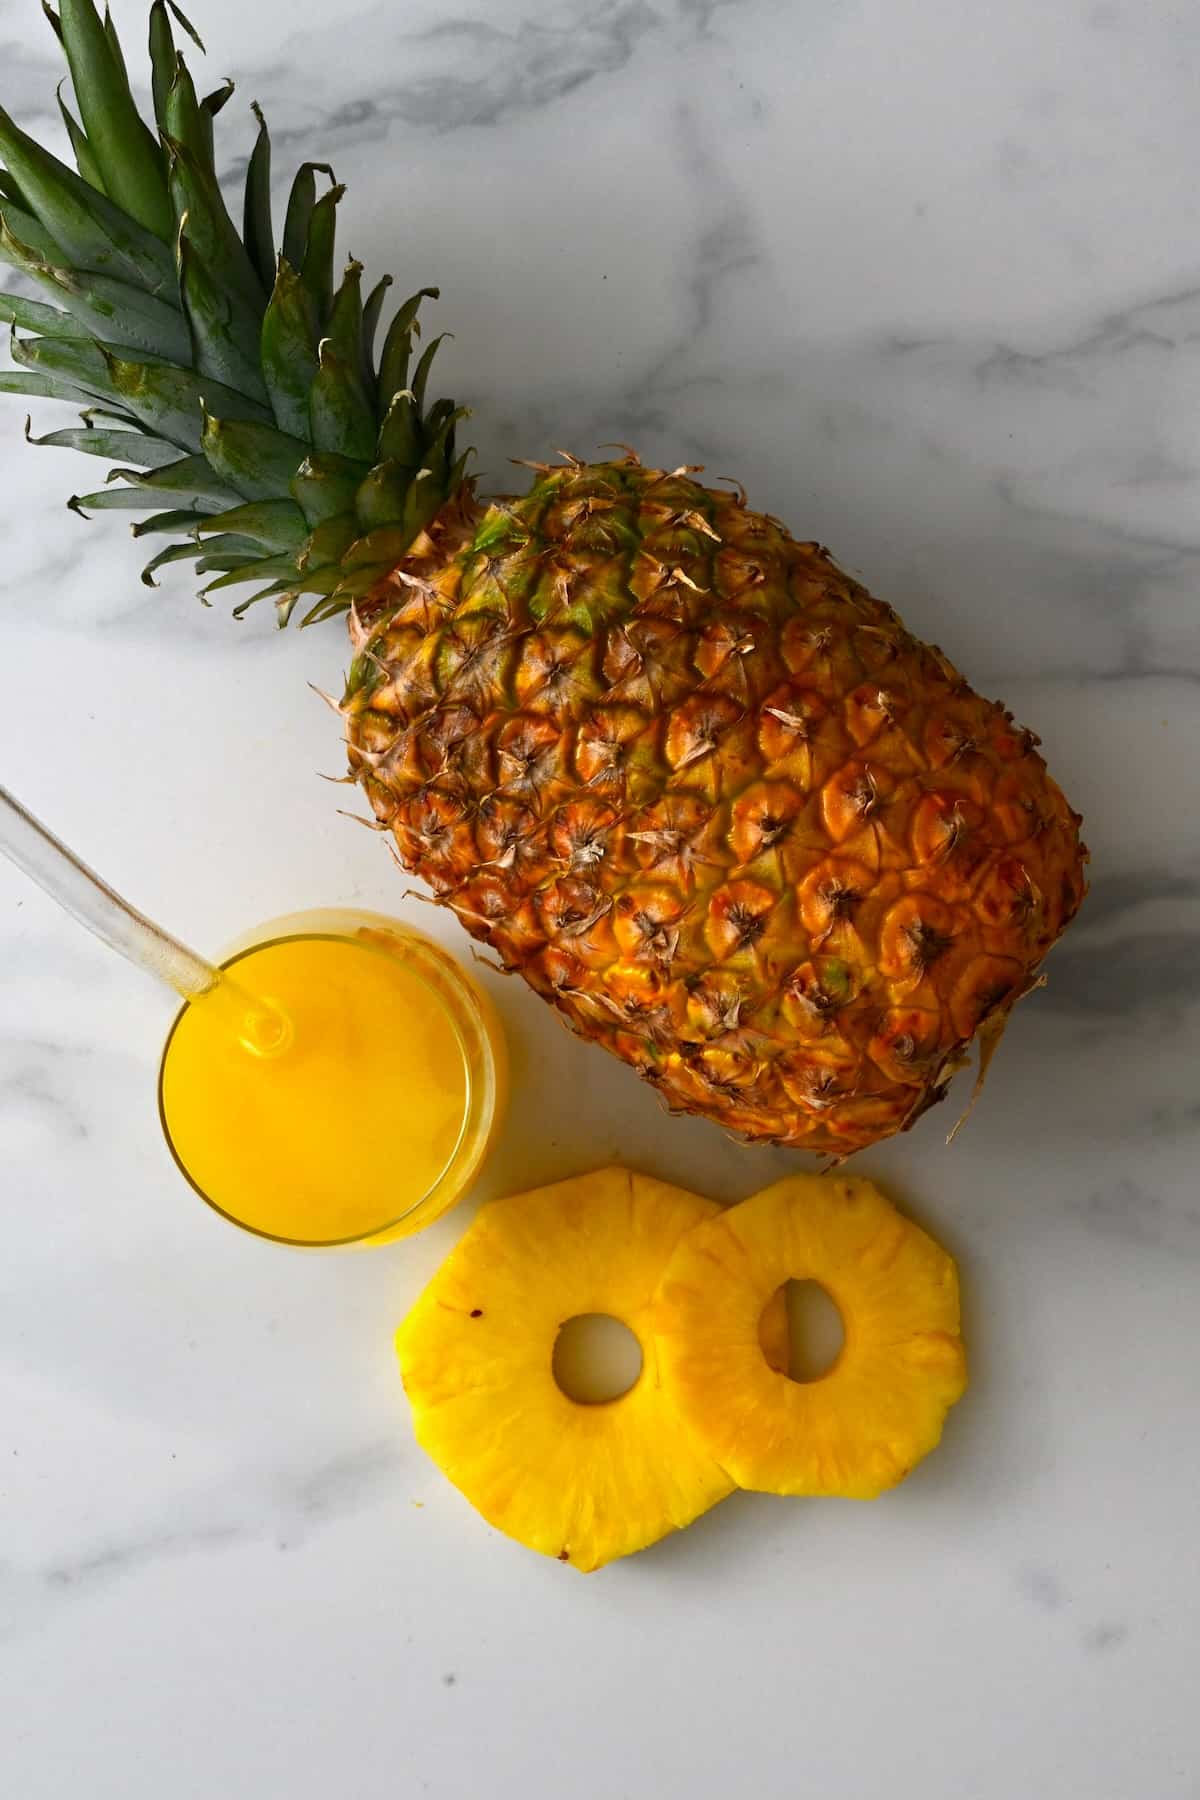 pineapple juice glass